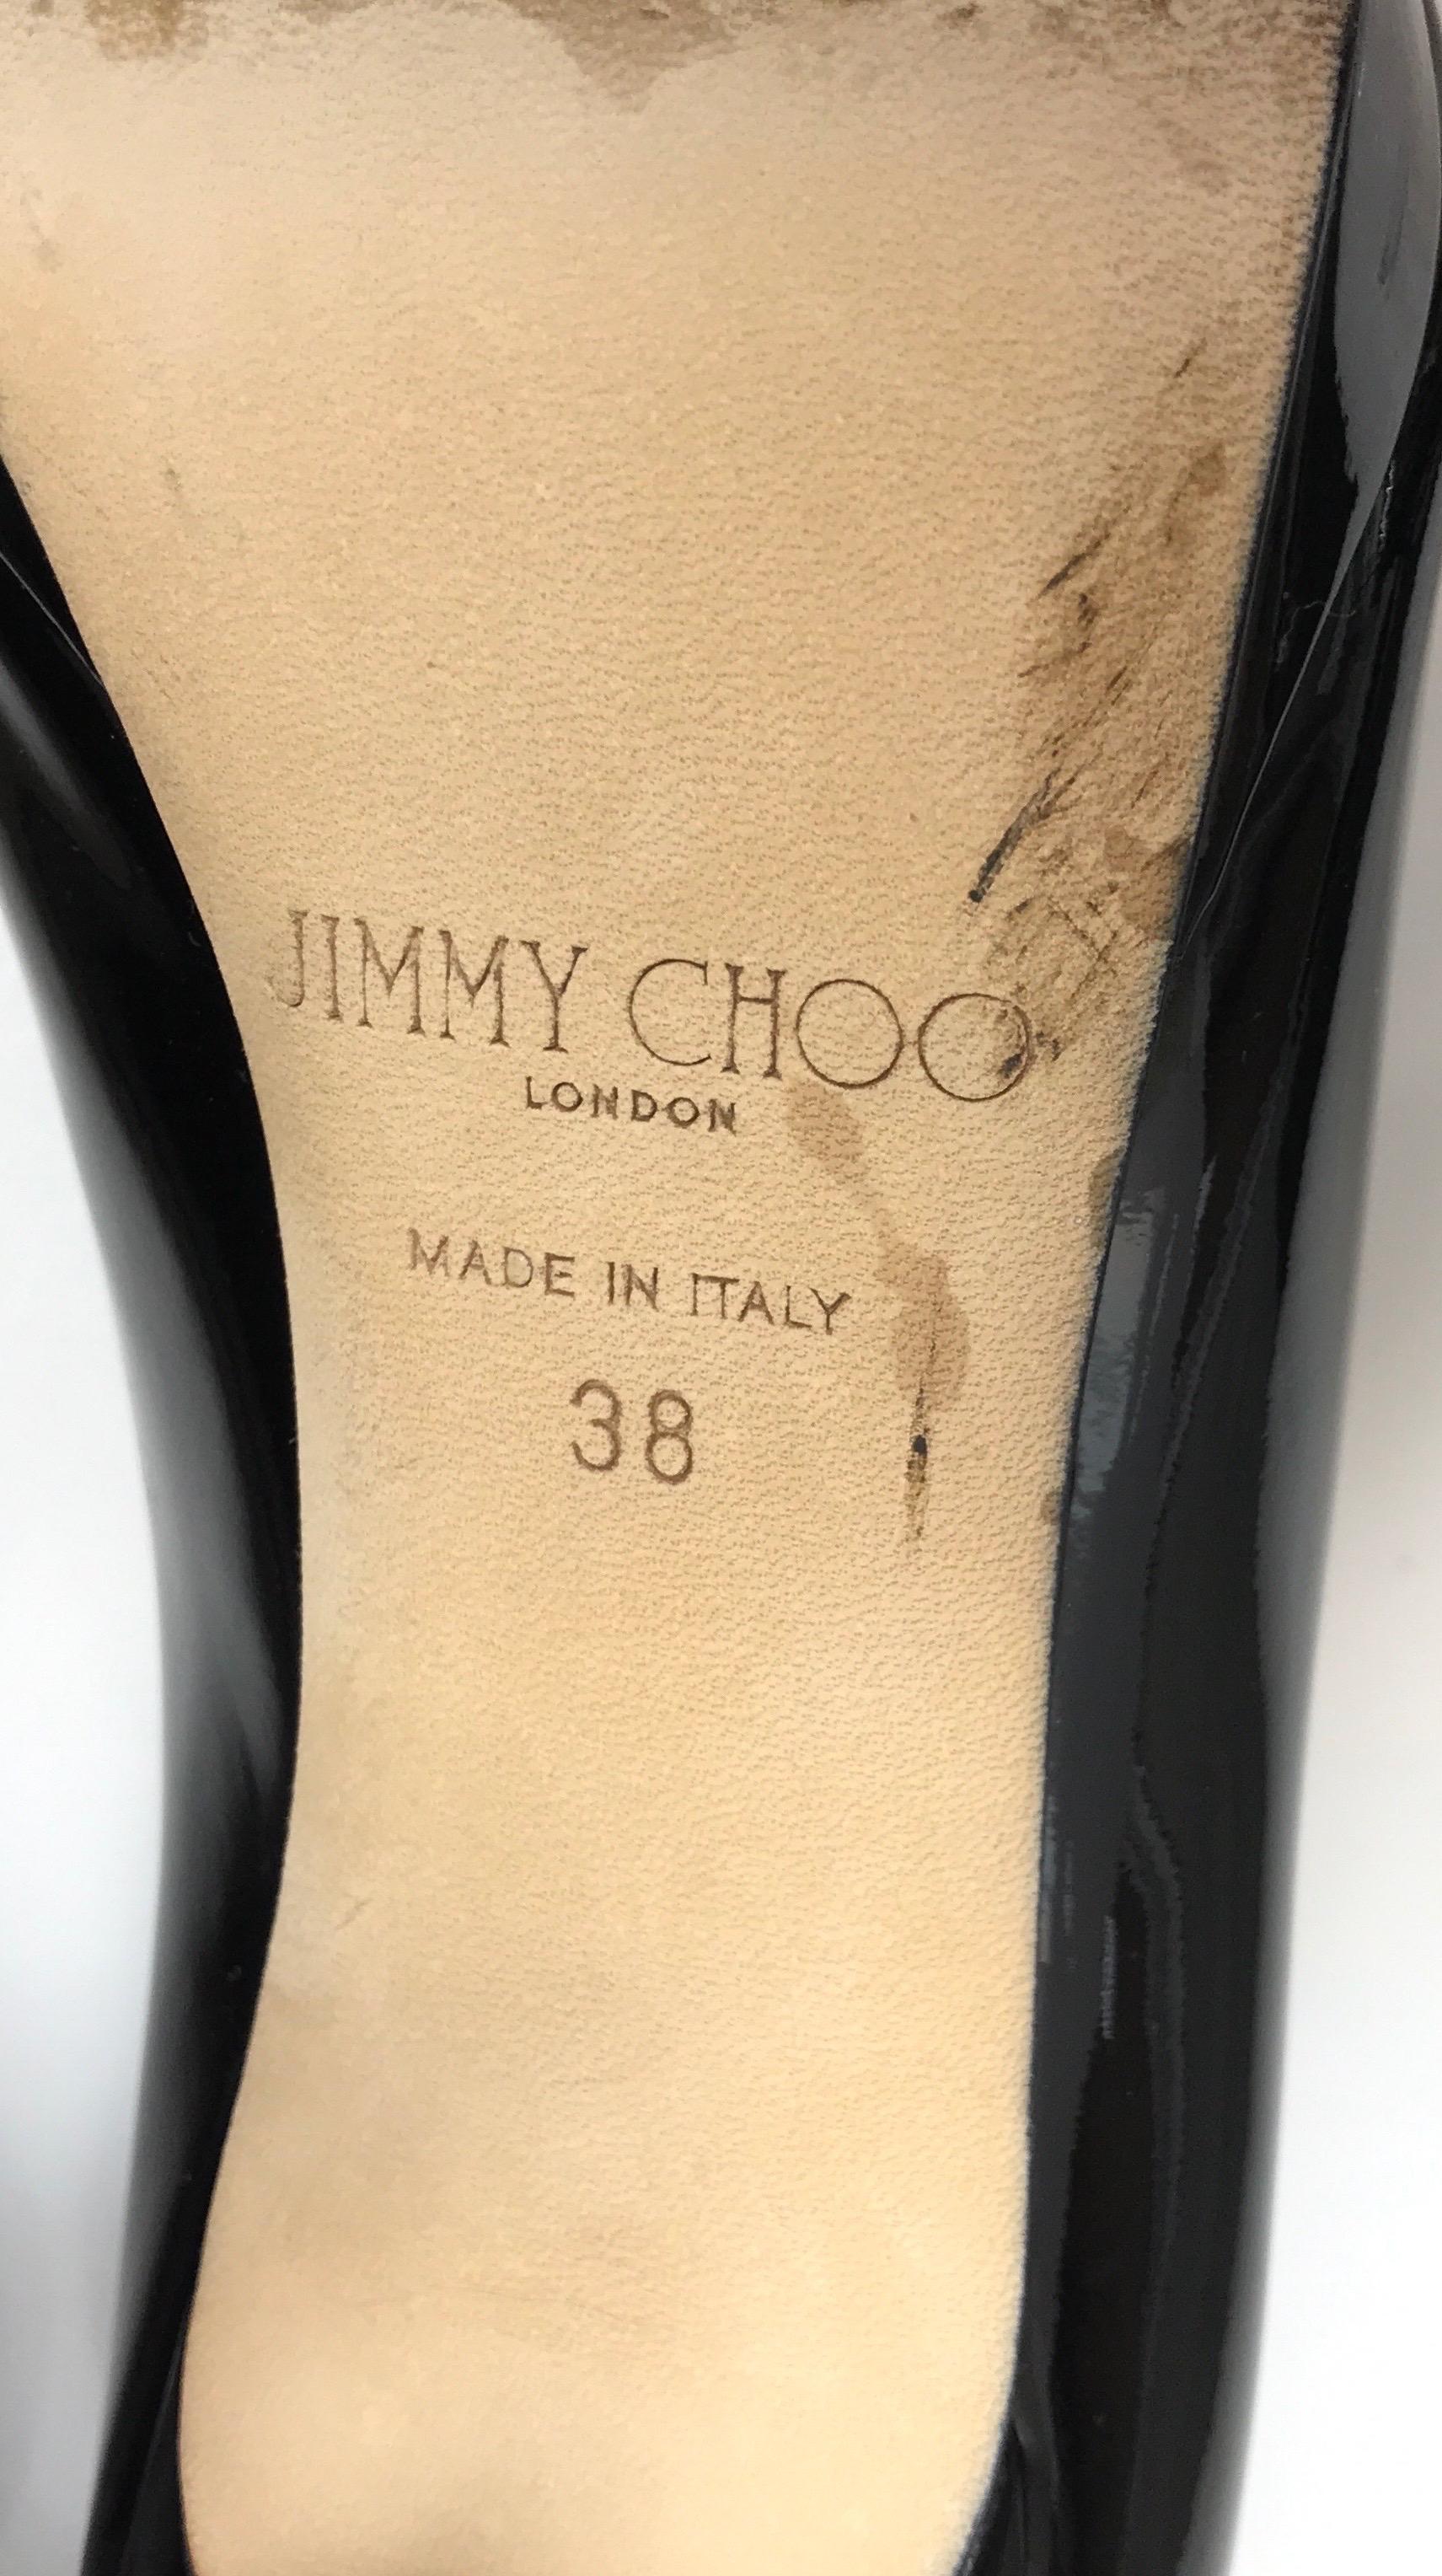 Jimmy Choo Black Patent Leather Peeptoe Heels-38 4